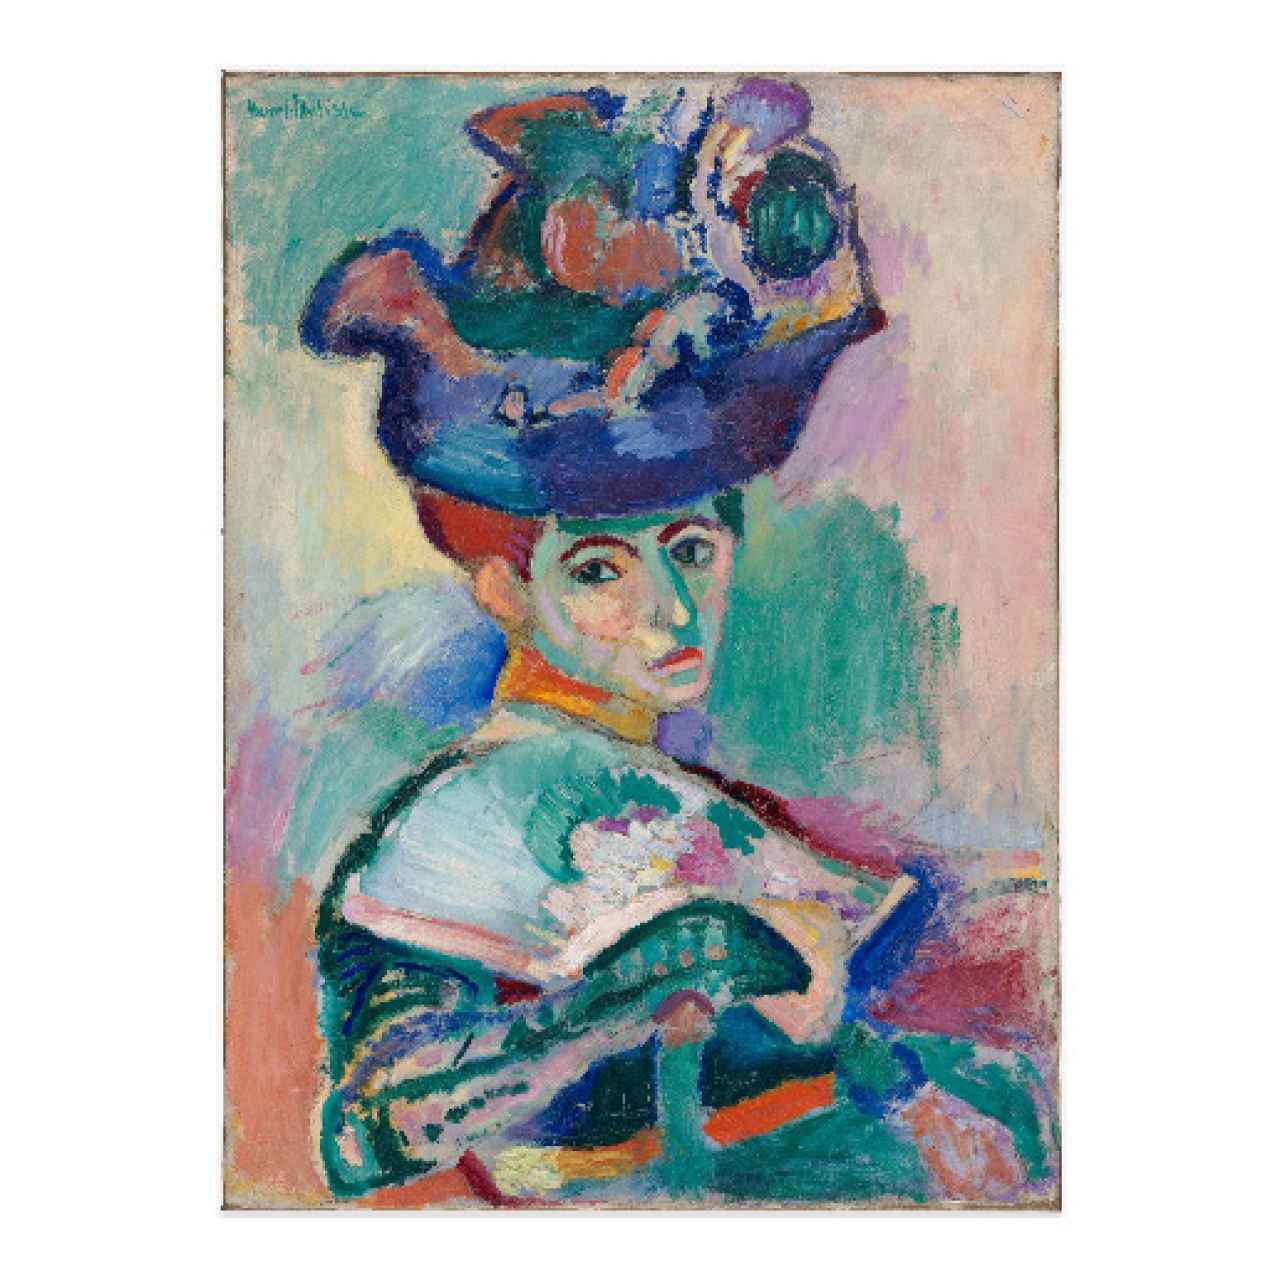 'Femme au chapeau' (1905), Henri Matisse.